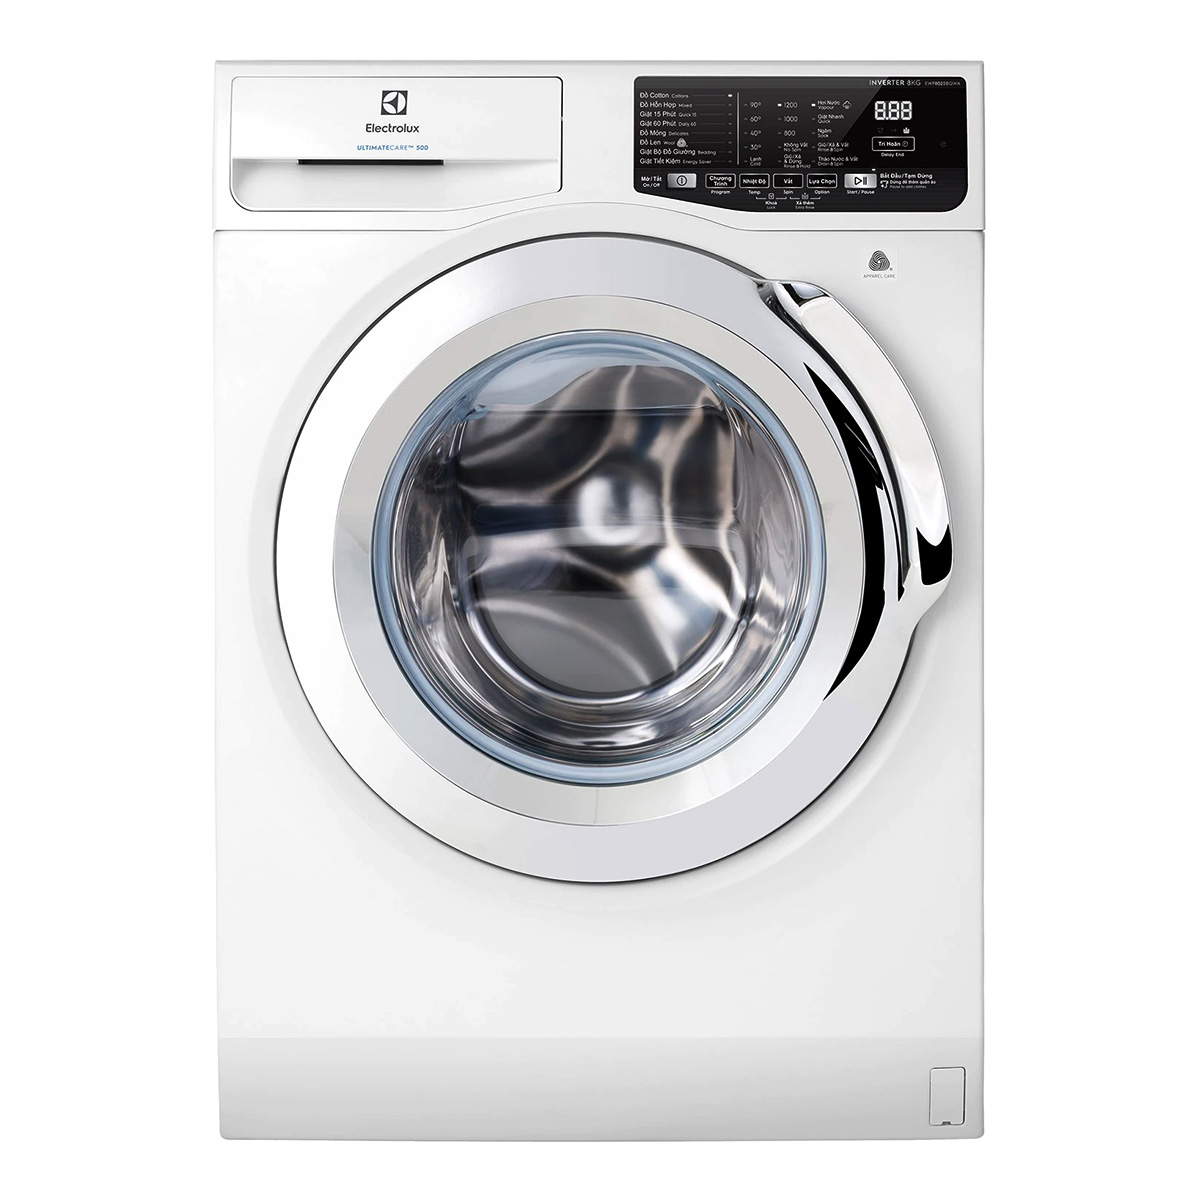 Máy giặt Electrolux 7kg chạy tốt giá rẻ